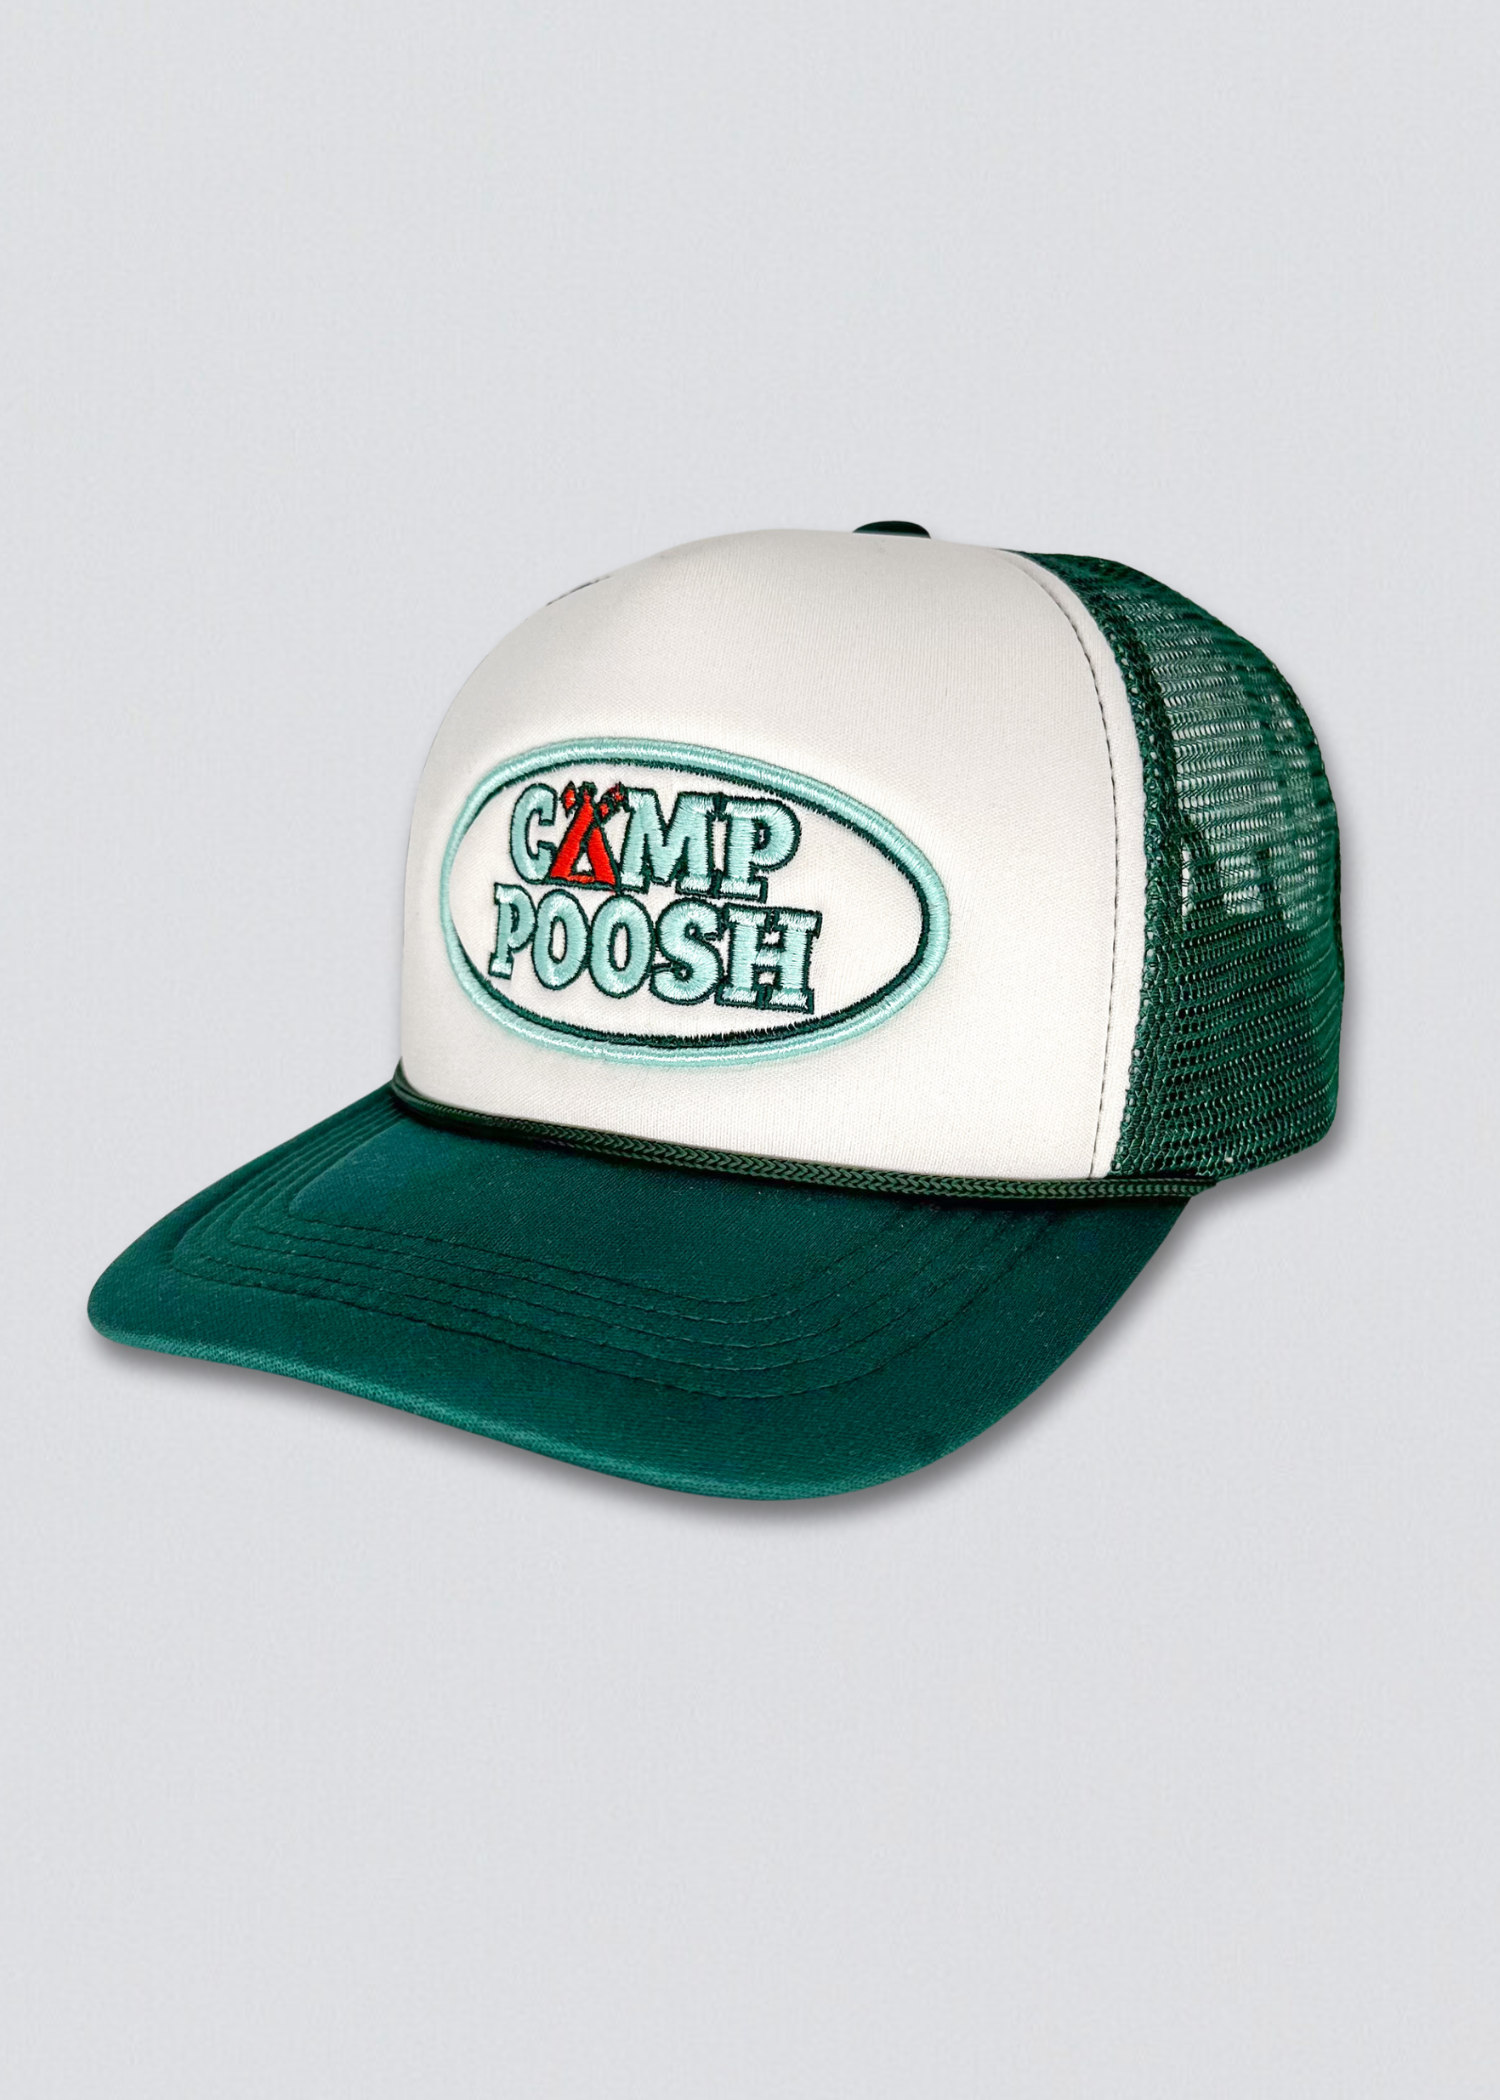 Camp Poosh x Coney Island Picnic Trucker Hat